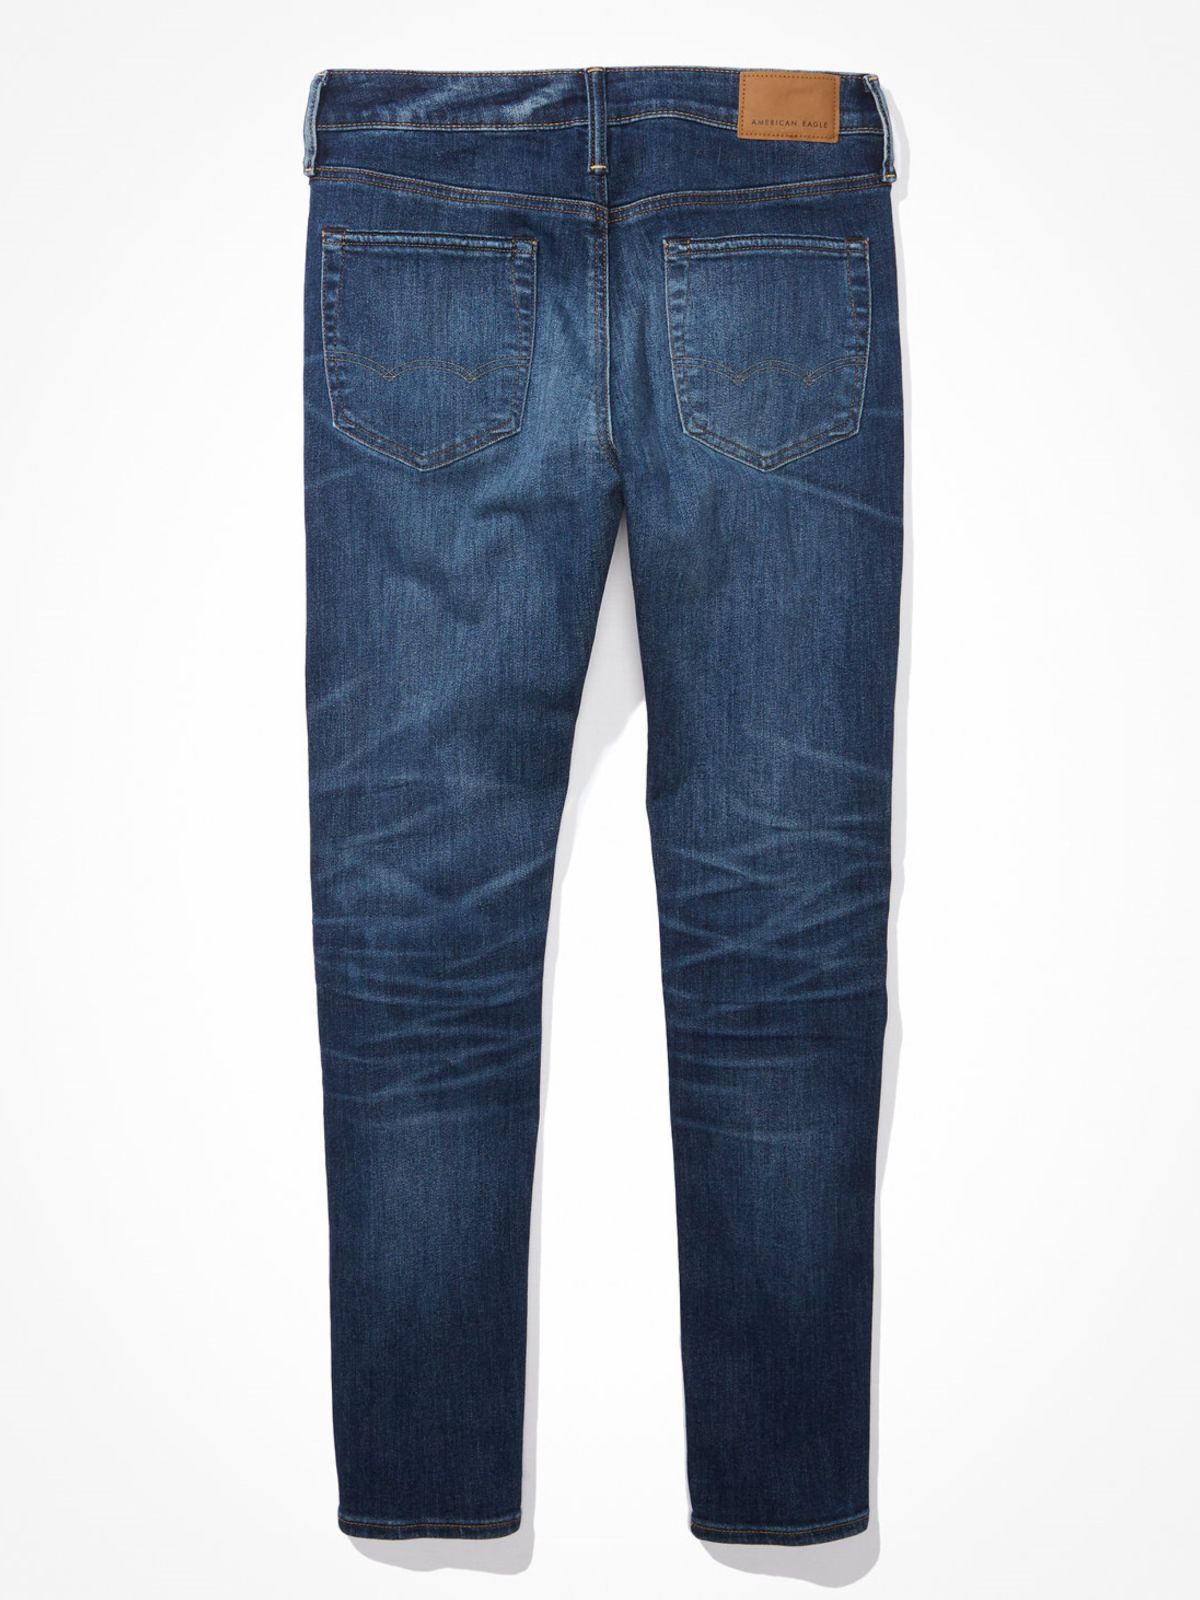  ג'ינס סקיני Dark clean sknny fit של AMERICAN EAGLE